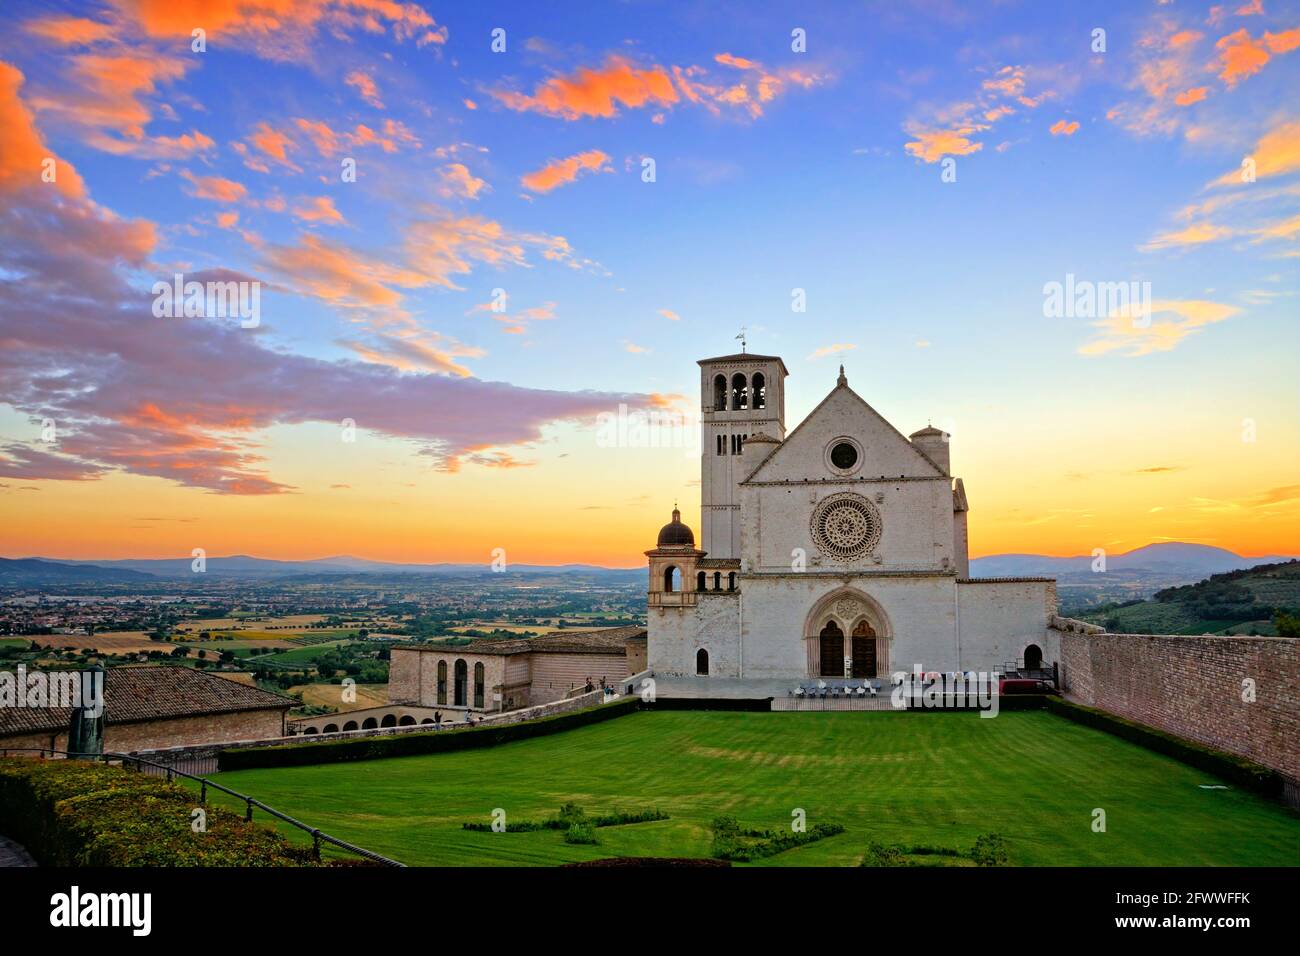 Basilika San Francis of Assisi bei Sonnenuntergang unter einem wunderschönen, orange-blauen Himmel, Italien Stockfoto